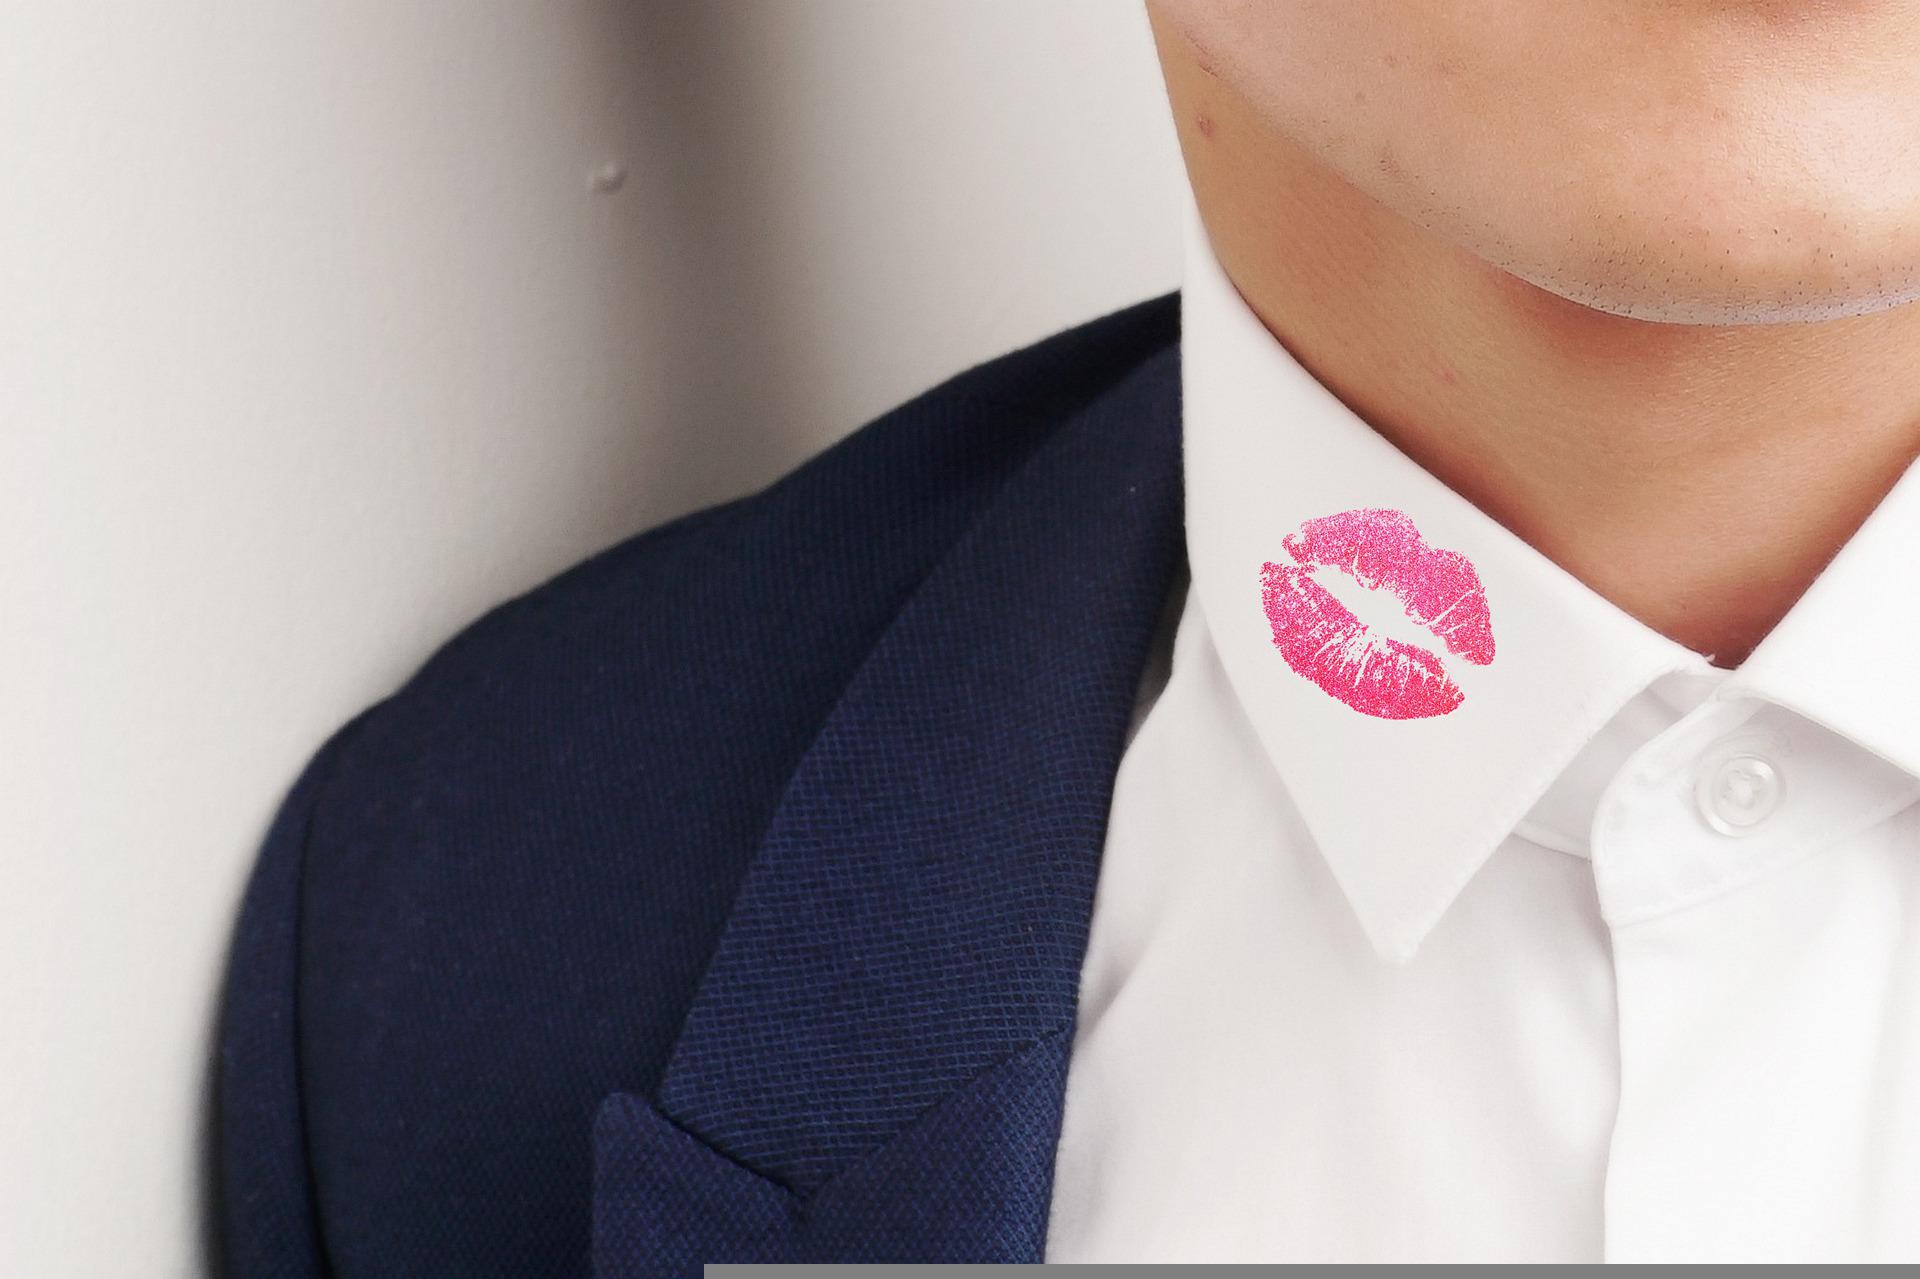 Doubts sparked when Ella first found lipstick stain on Edward's shirt. | Source: Pixabay